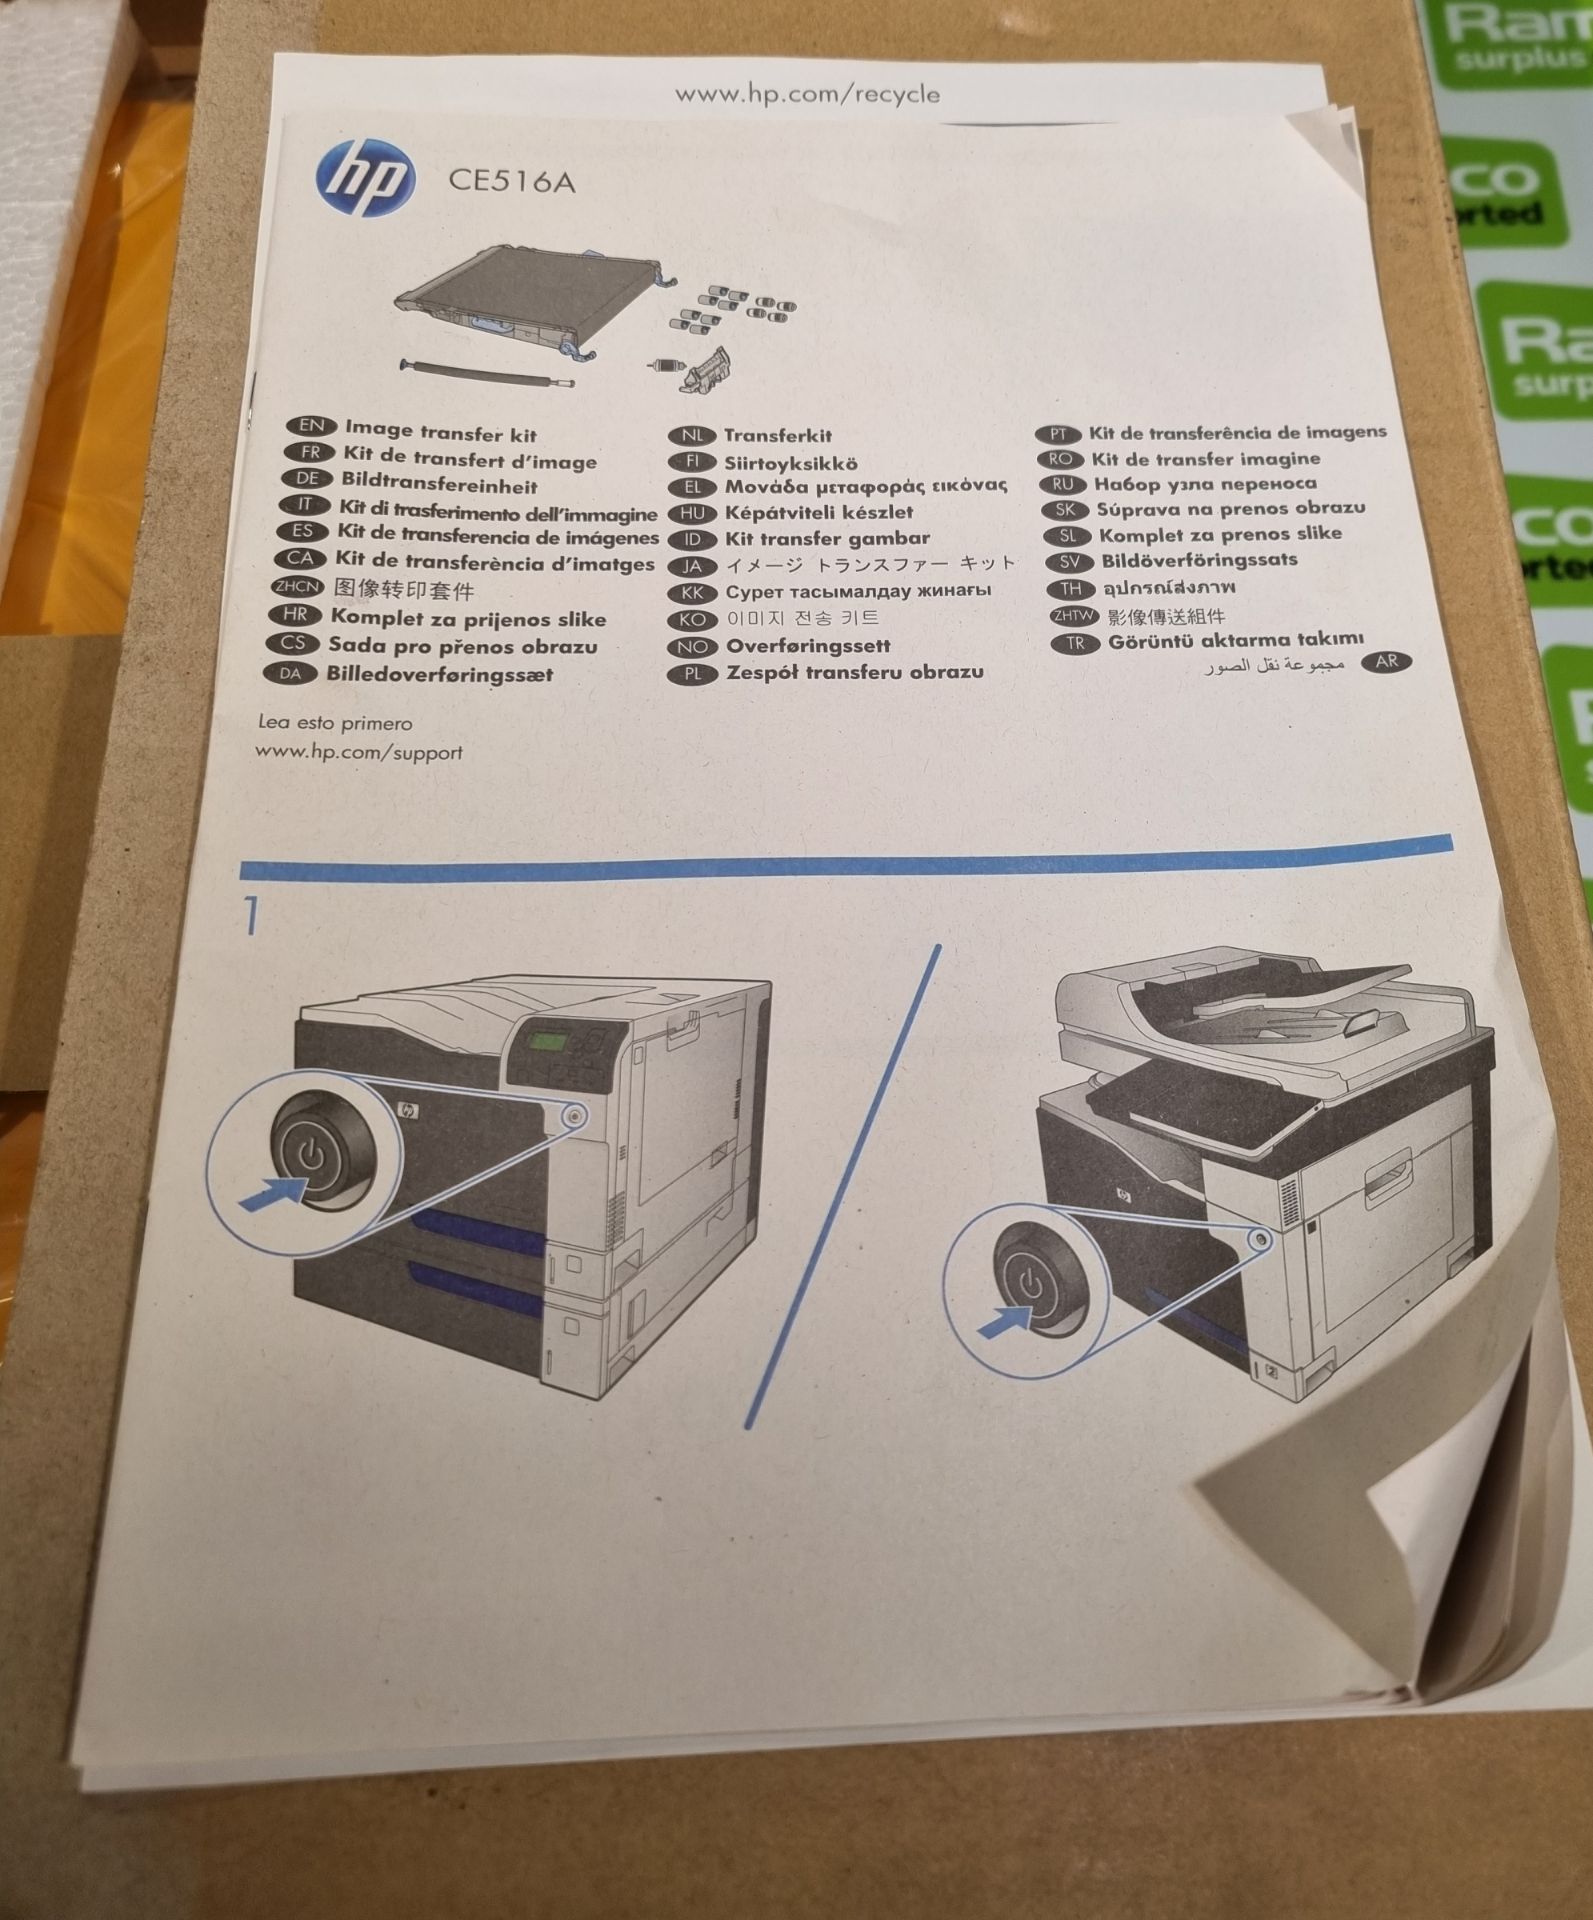 HP CE516A Image transfer kit - Image 2 of 3